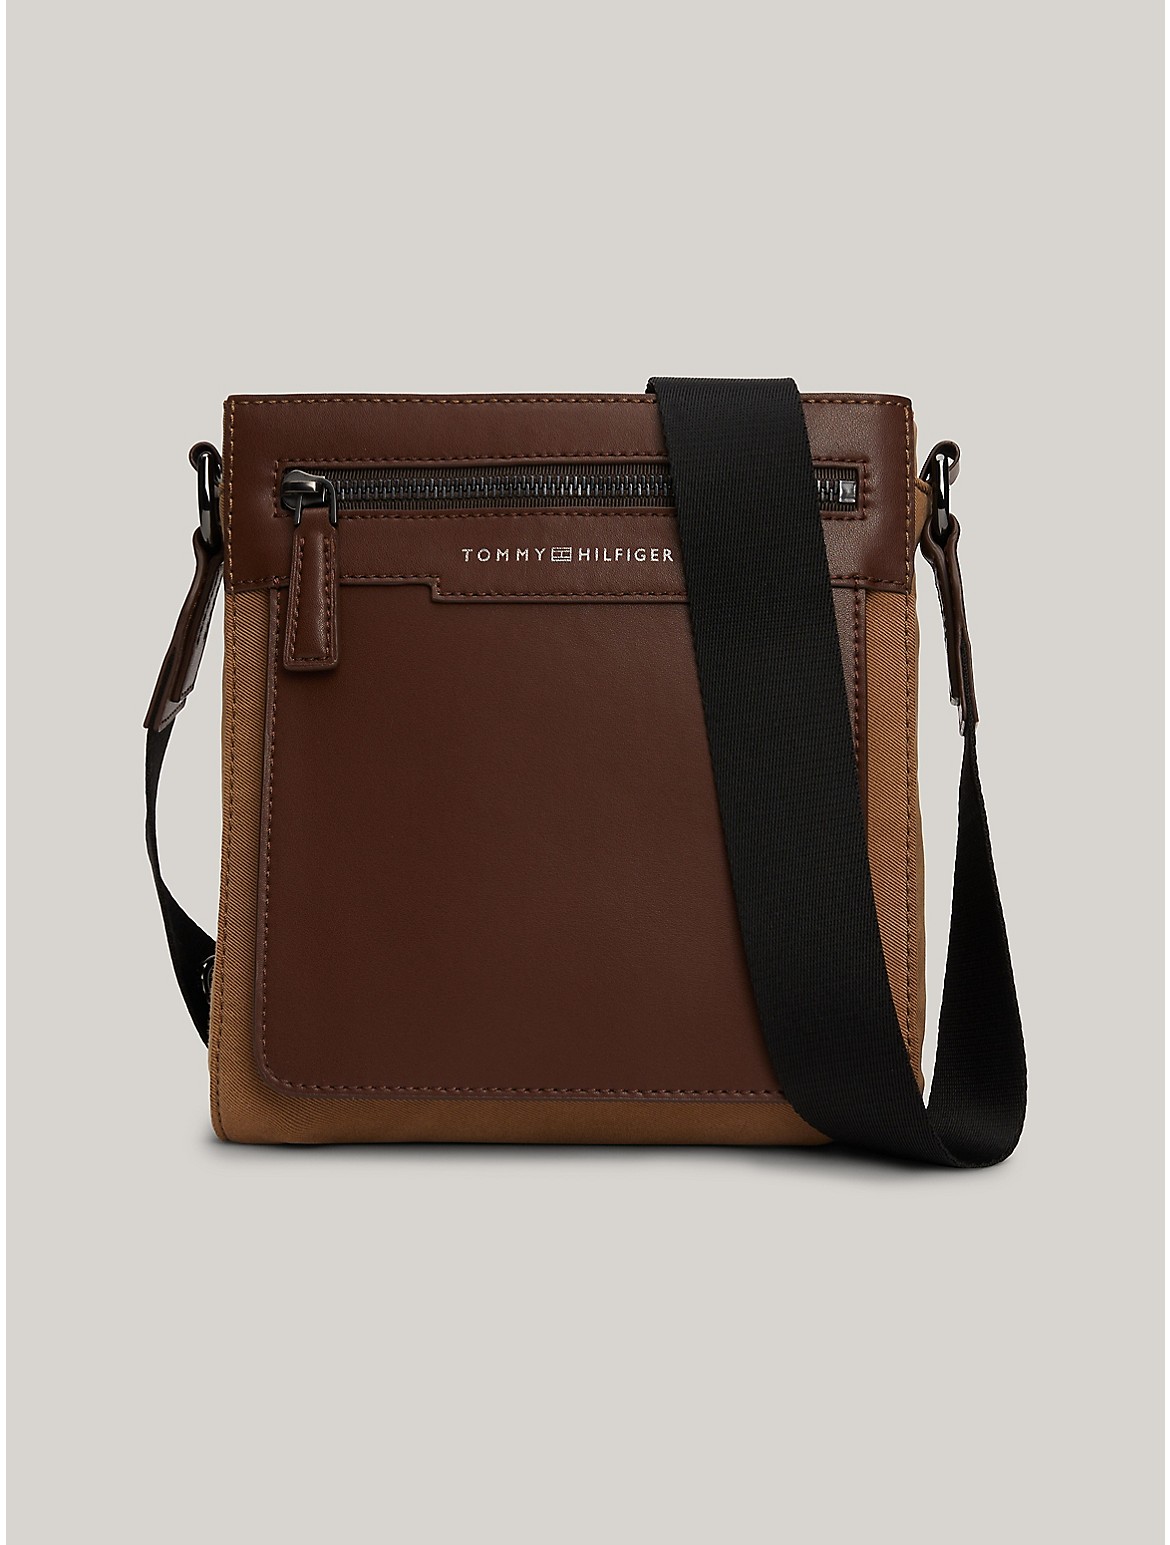 Tommy Hilfiger Men's Leather Trim Mini Crossbody Bag